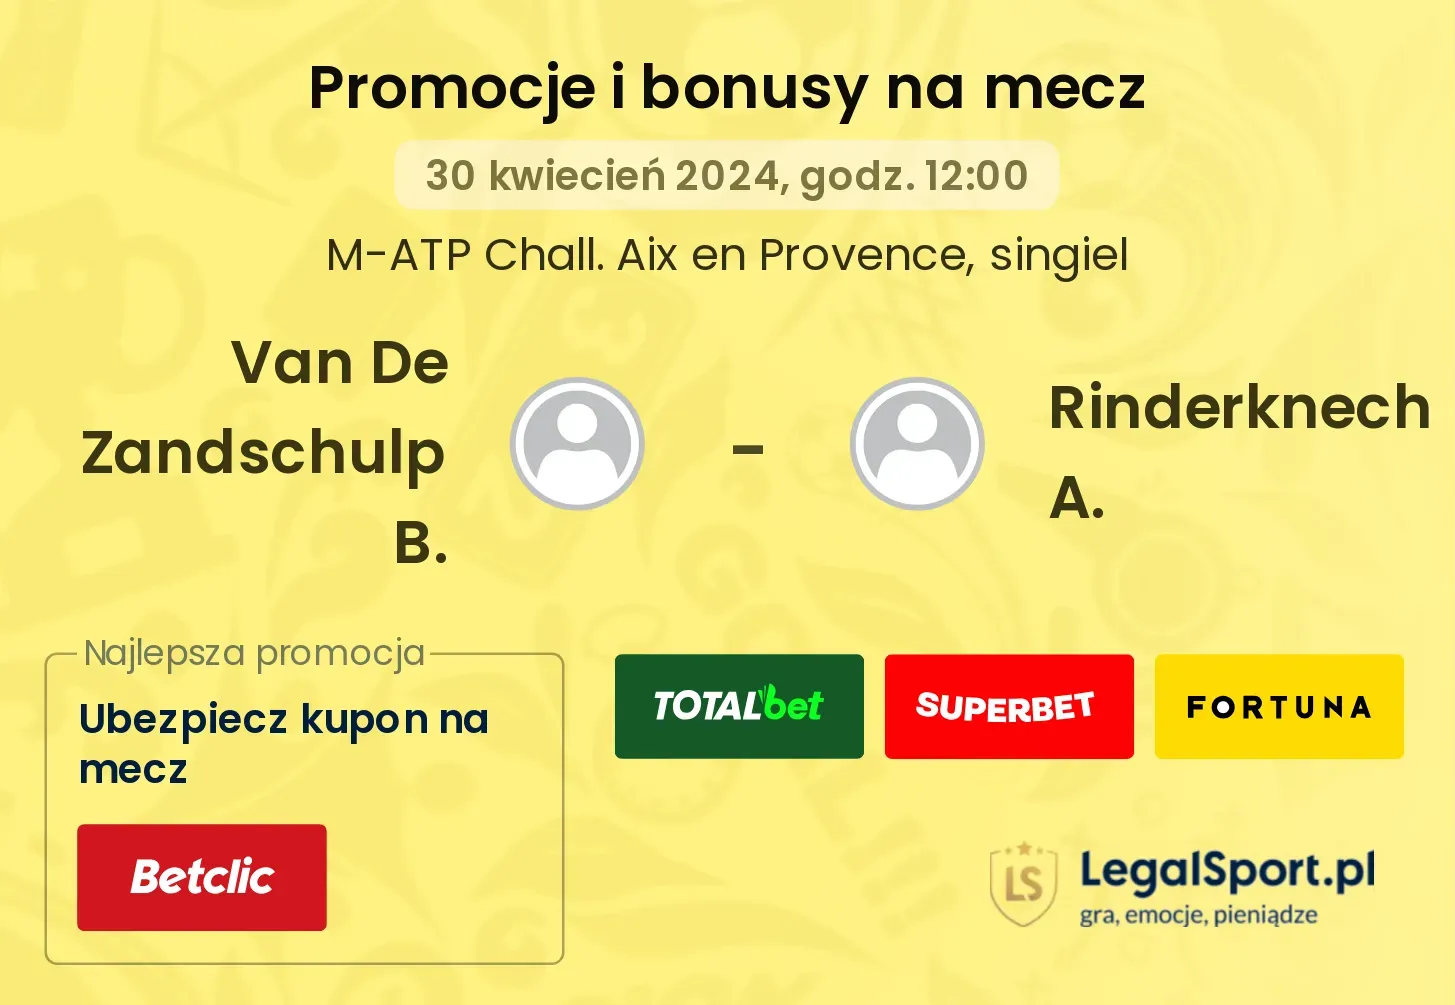 Van De Zandschulp B. - Rinderknech A. promocje bonusy na mecz